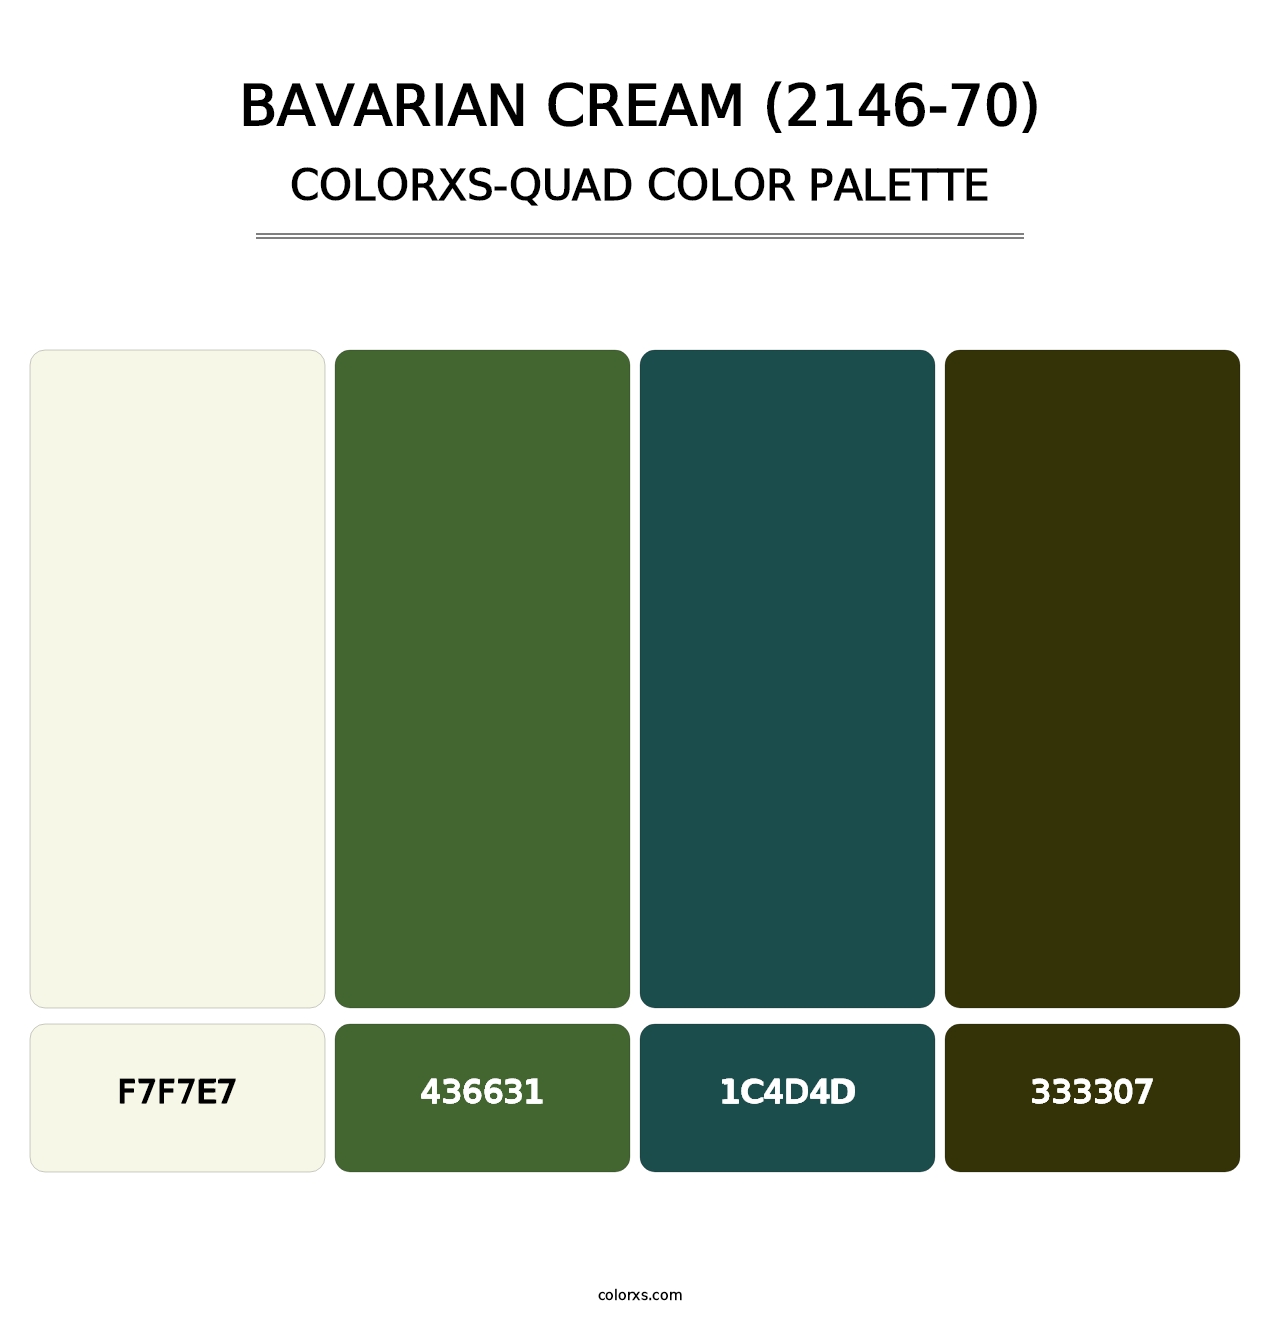 Bavarian Cream (2146-70) - Colorxs Quad Palette